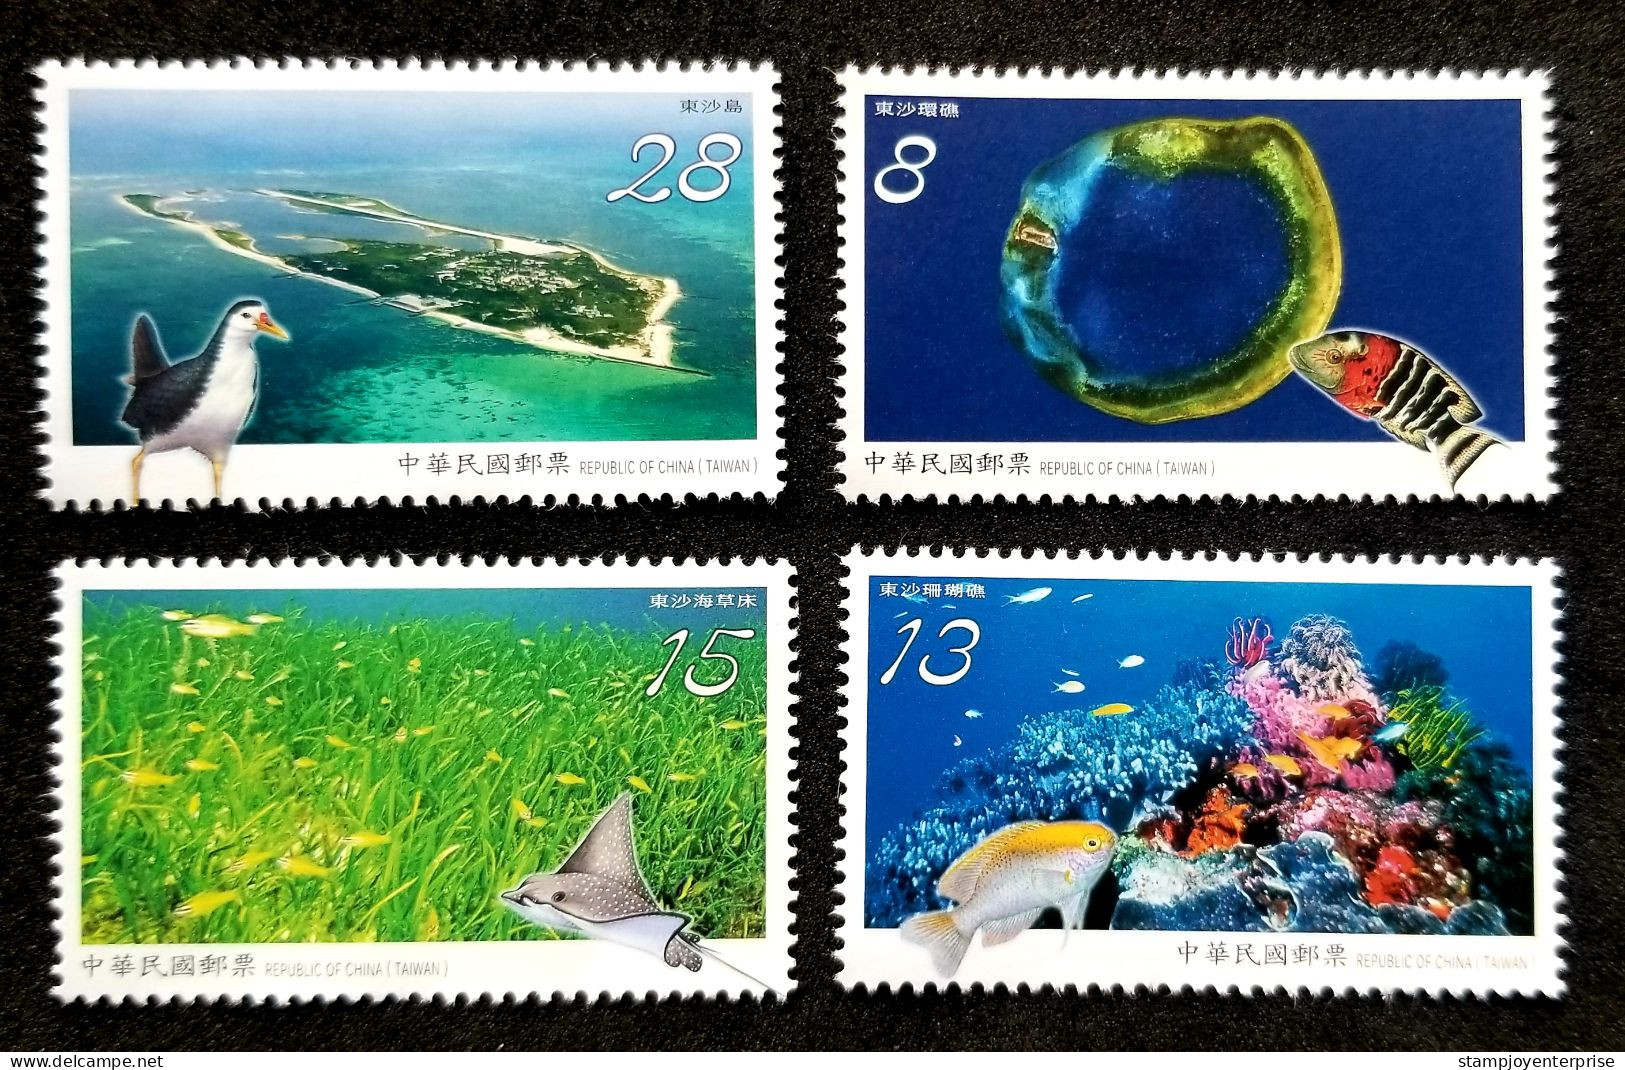 Taiwan Dongsha Atoll National Park 2019 Bird Ray Fish Marine Life Coral Reef Corals Underwater (stamp) MNH - Nuevos